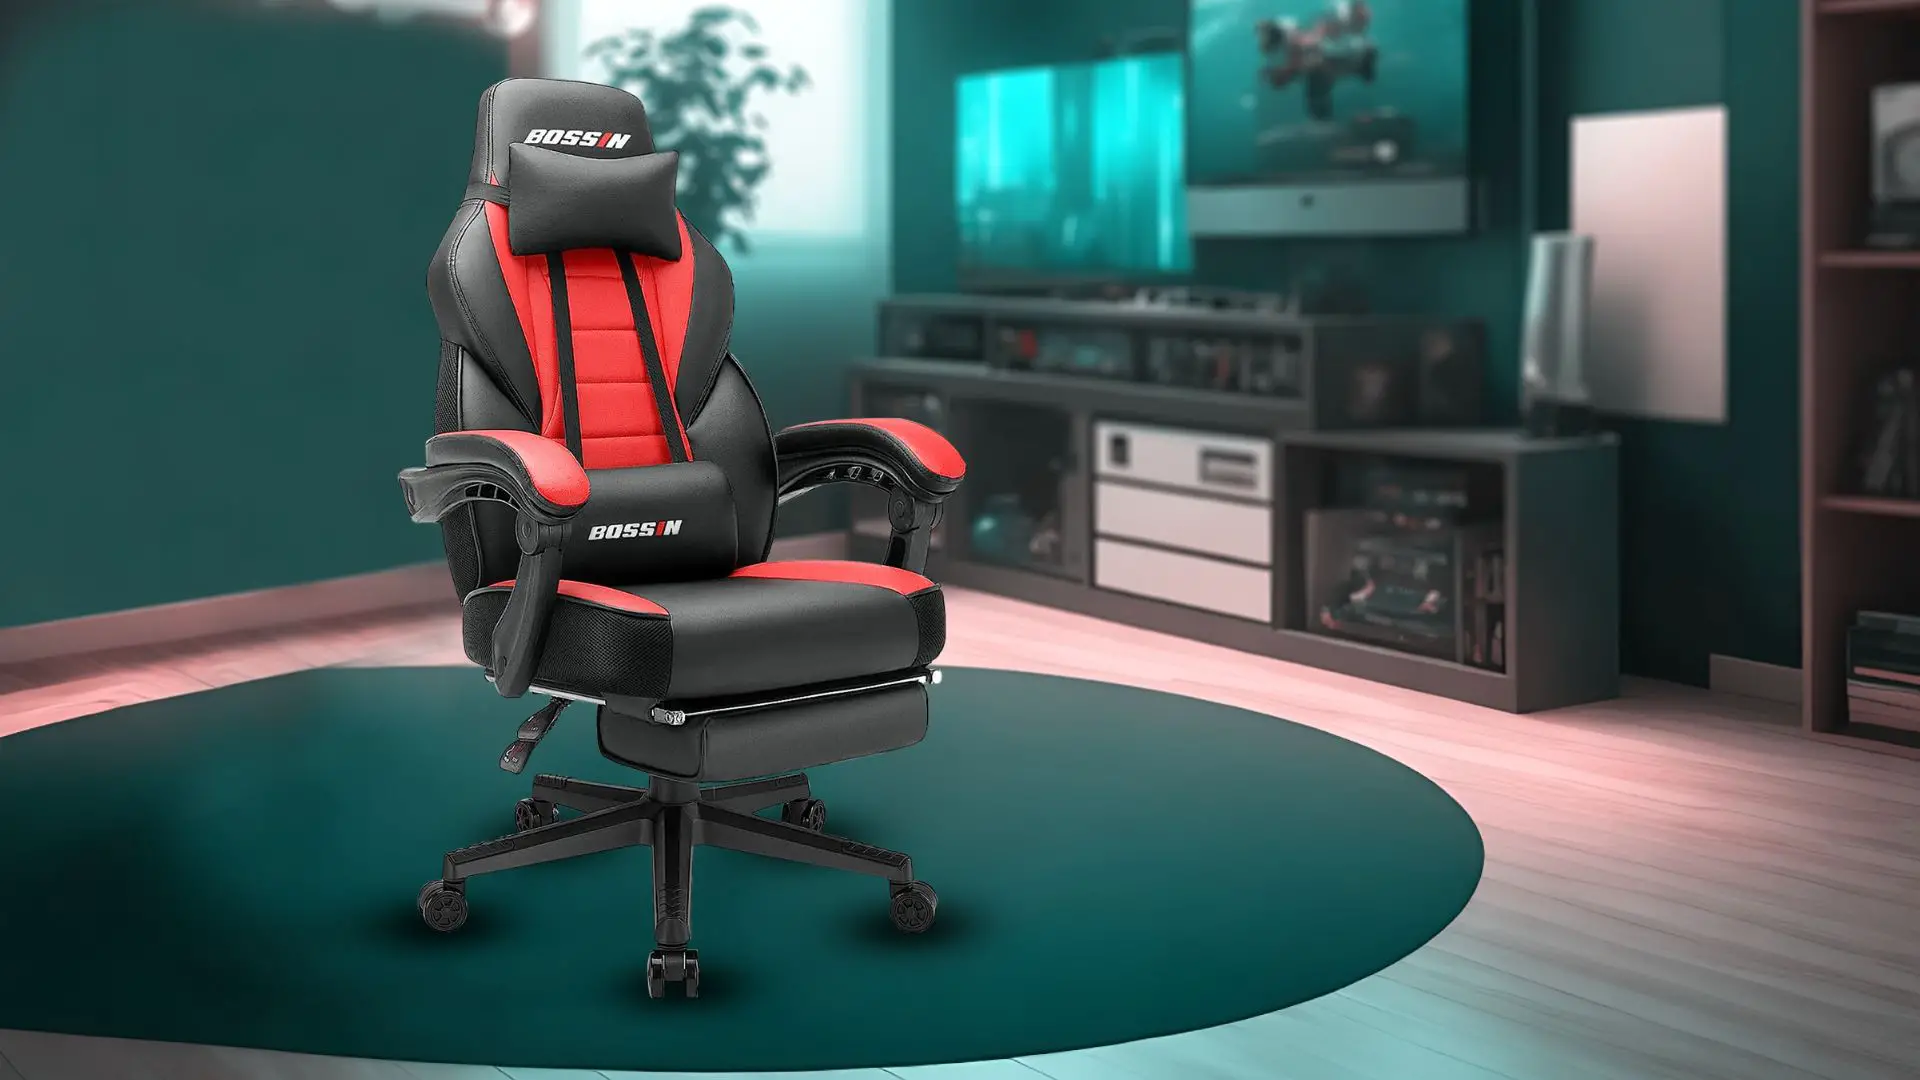 5.LEMBERI Video Games Chair